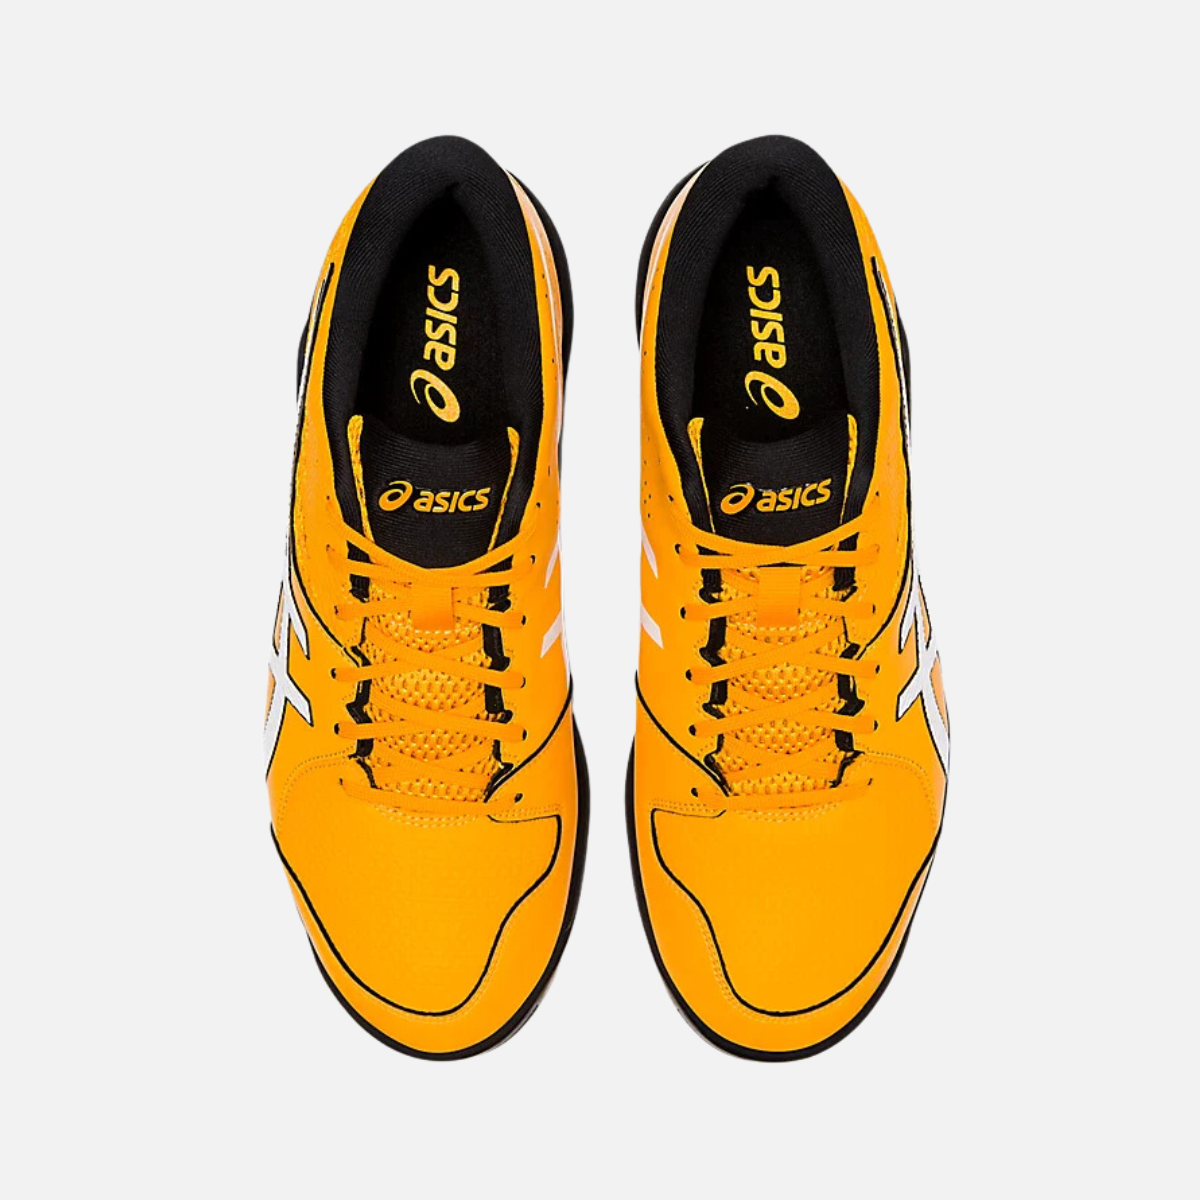 Asics Gel-Peake 2 Men's Cricket Shoes -Amber/White